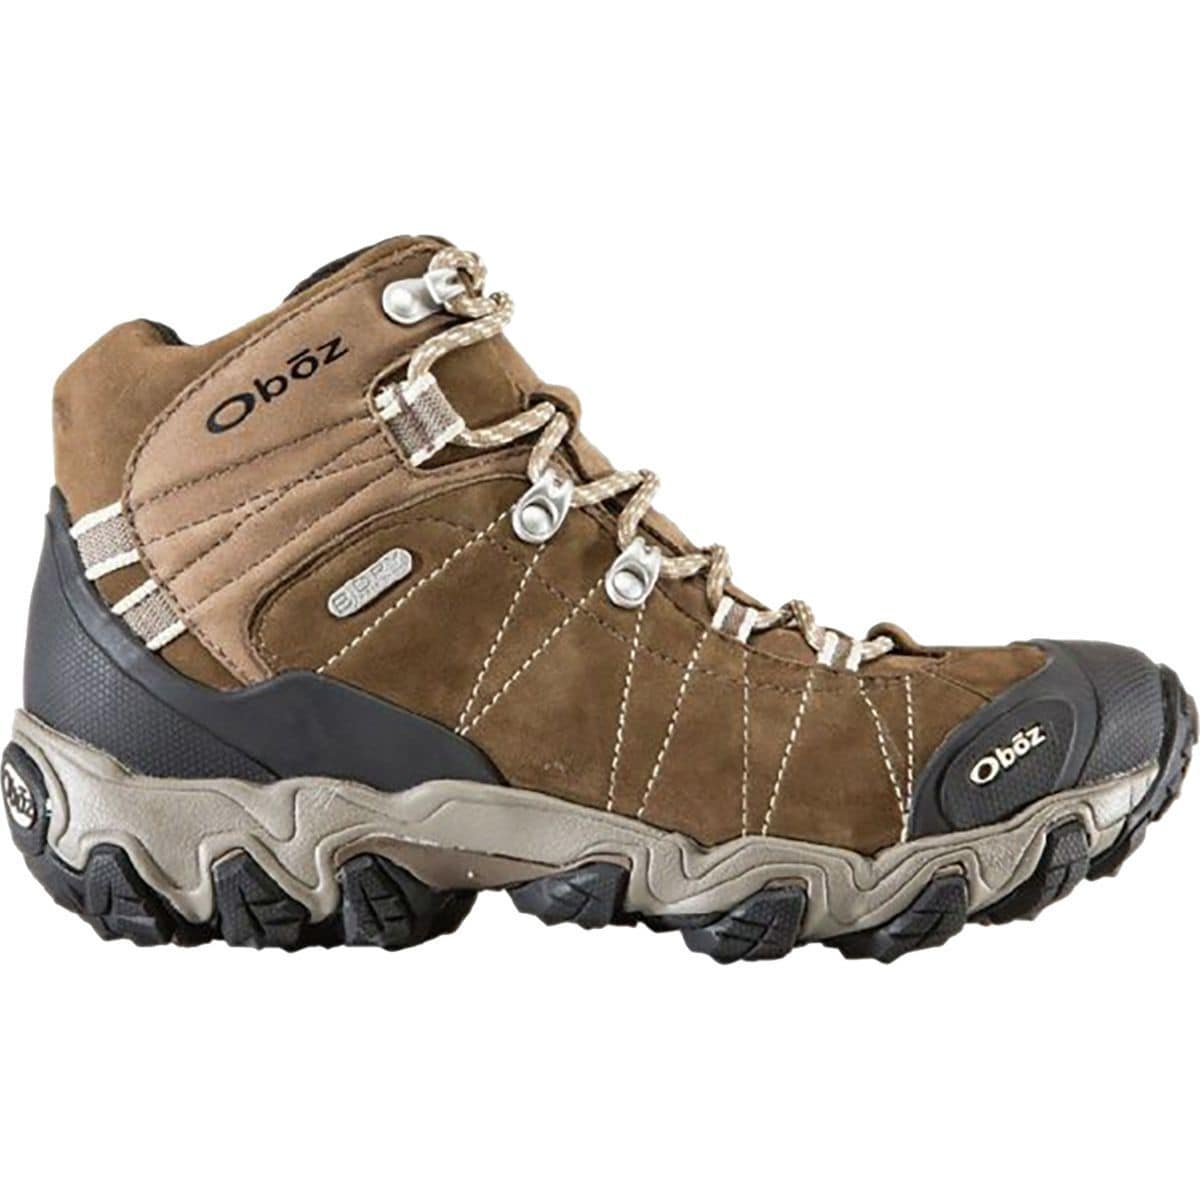 Oboz Bridger Mid B-Dry Wide Hiking Boot - Women's